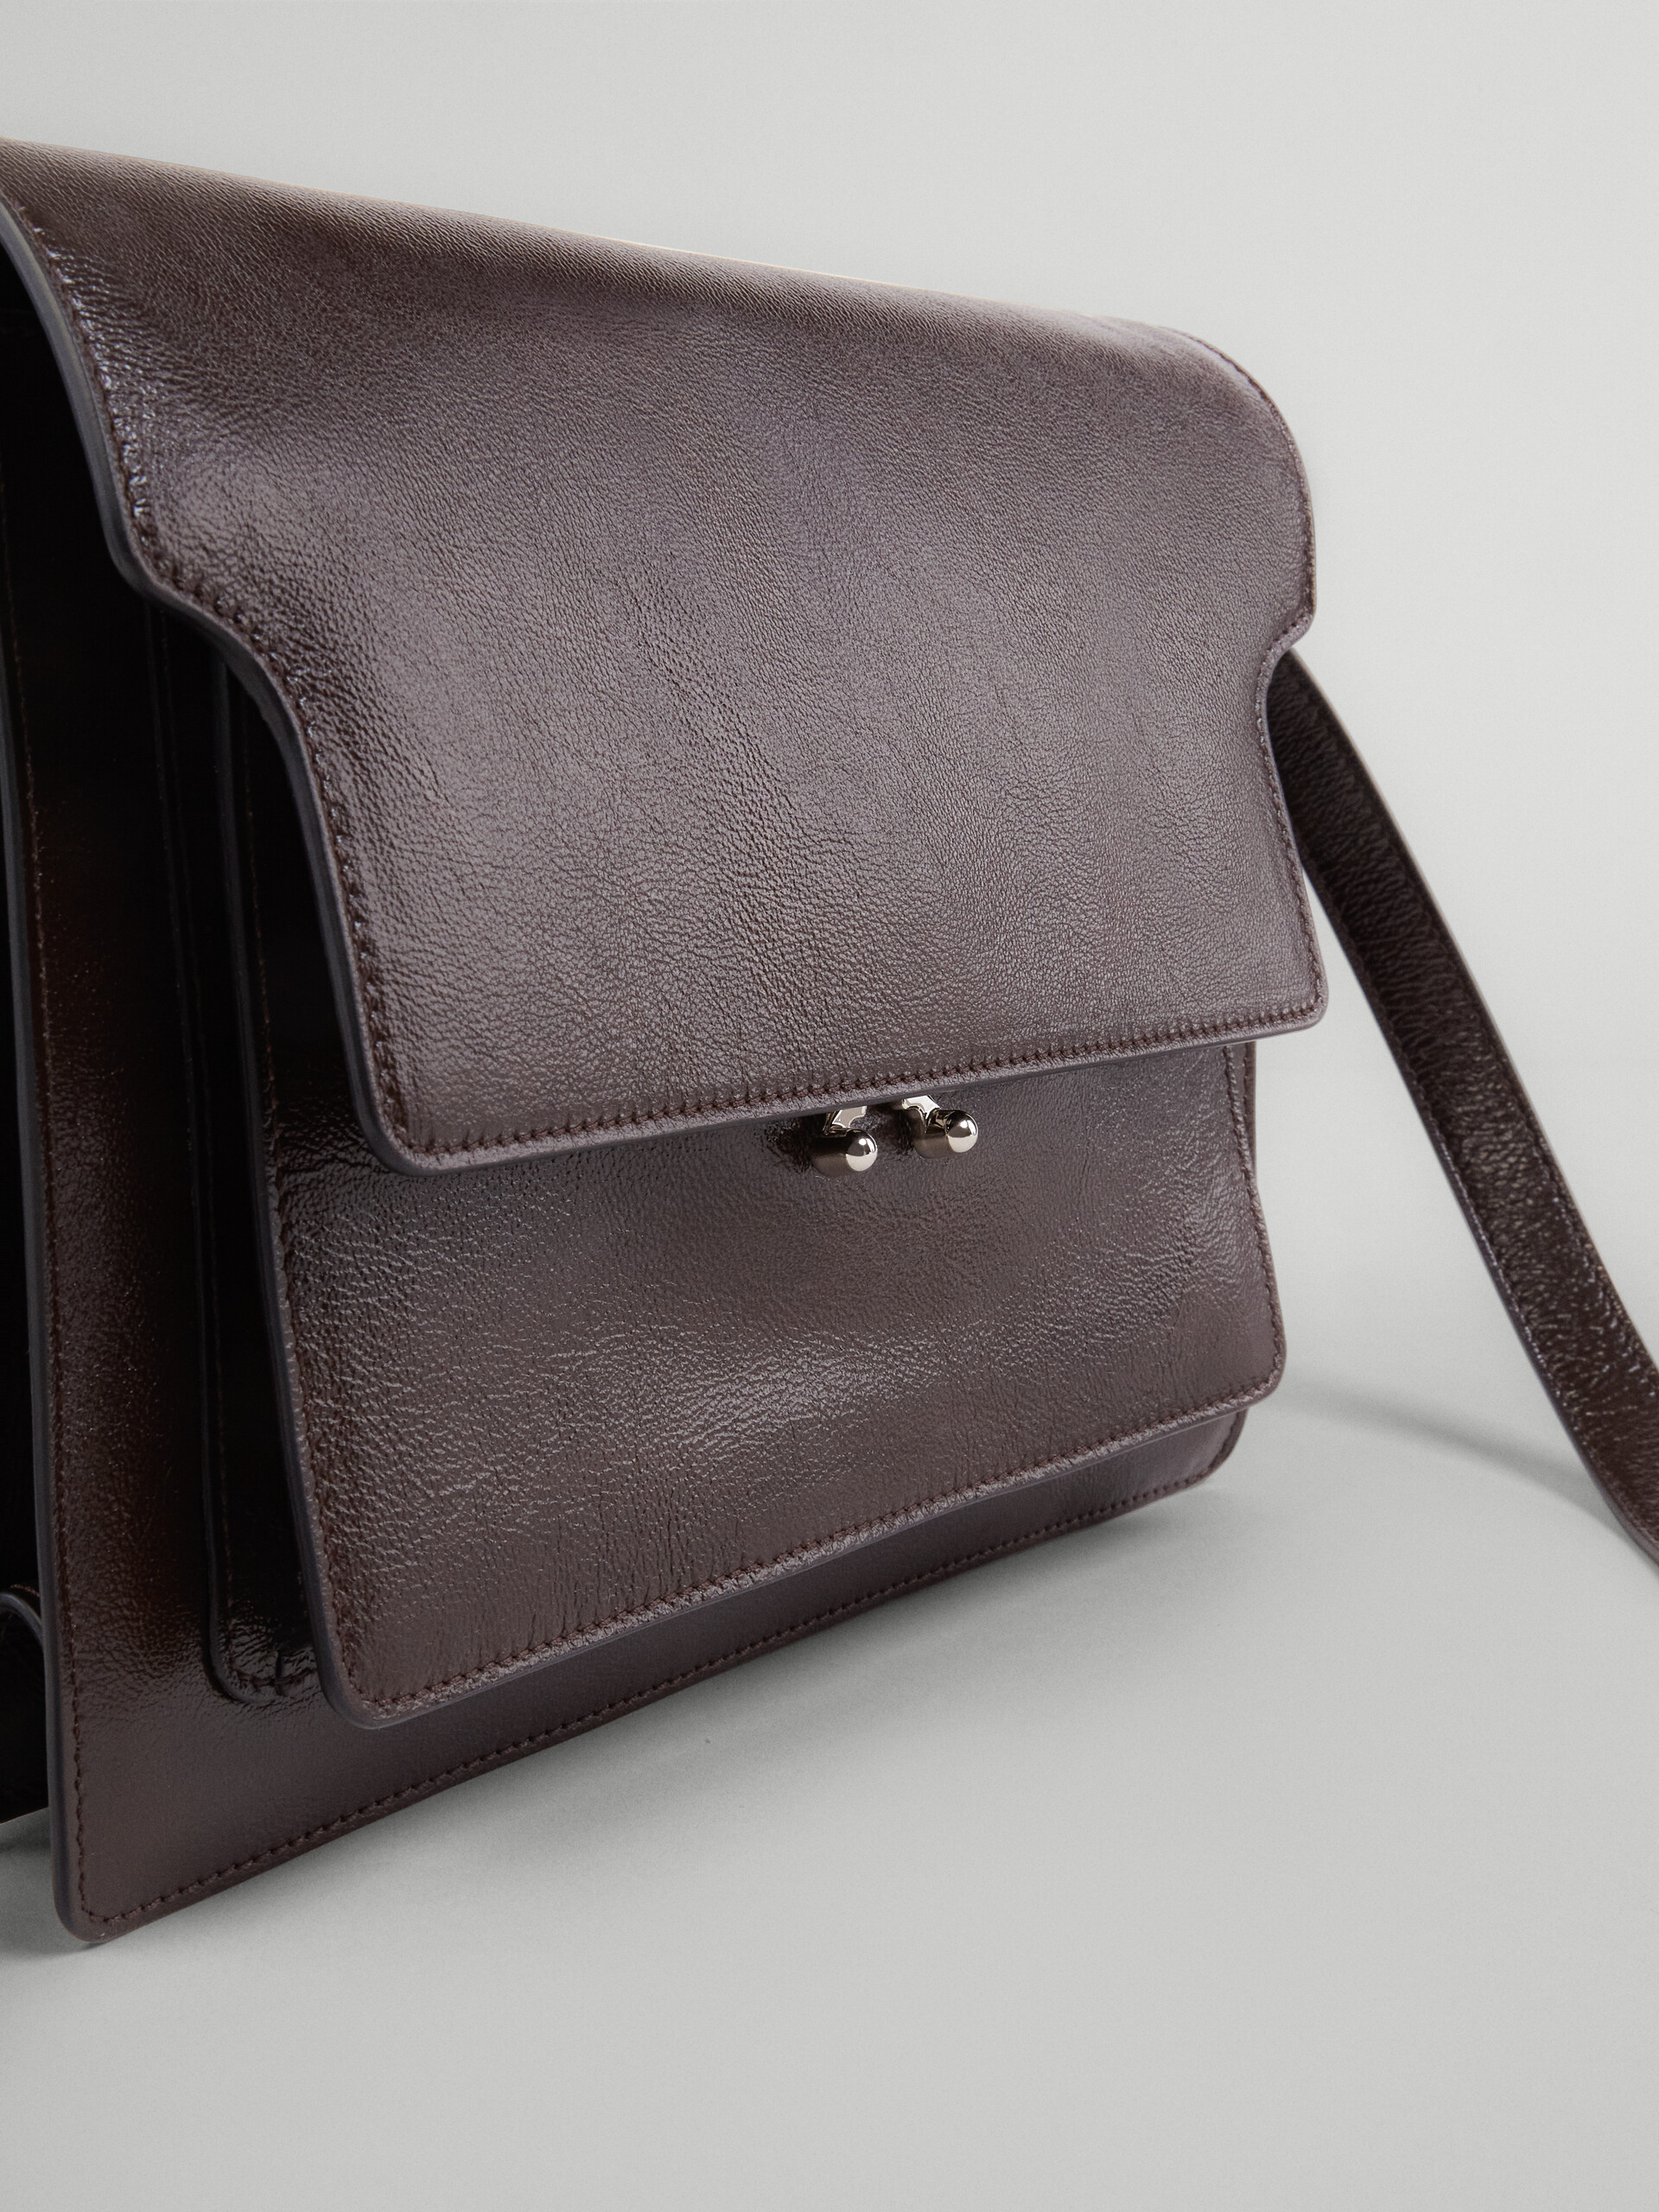 TRUNK SOFT large bag in brown leather - Shoulder Bags - Image 3